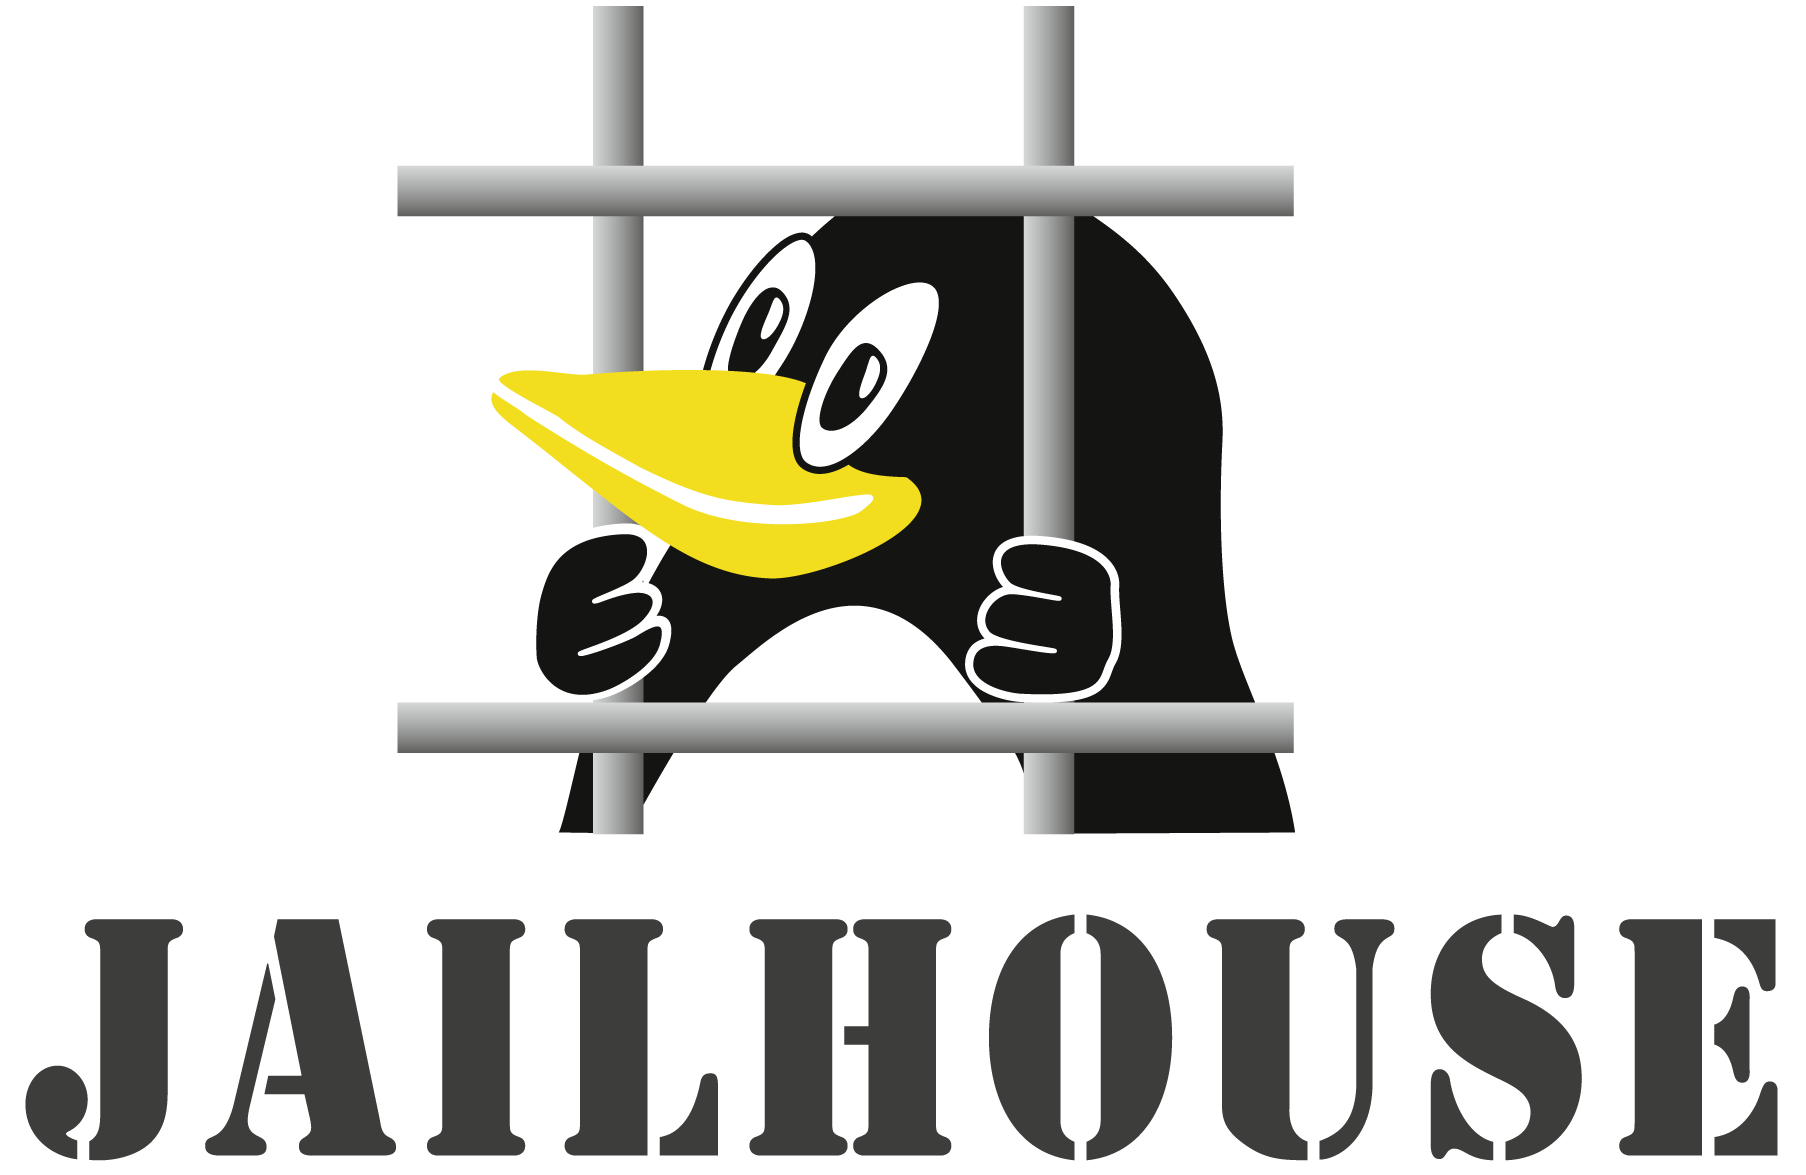 TUX Jailhouse